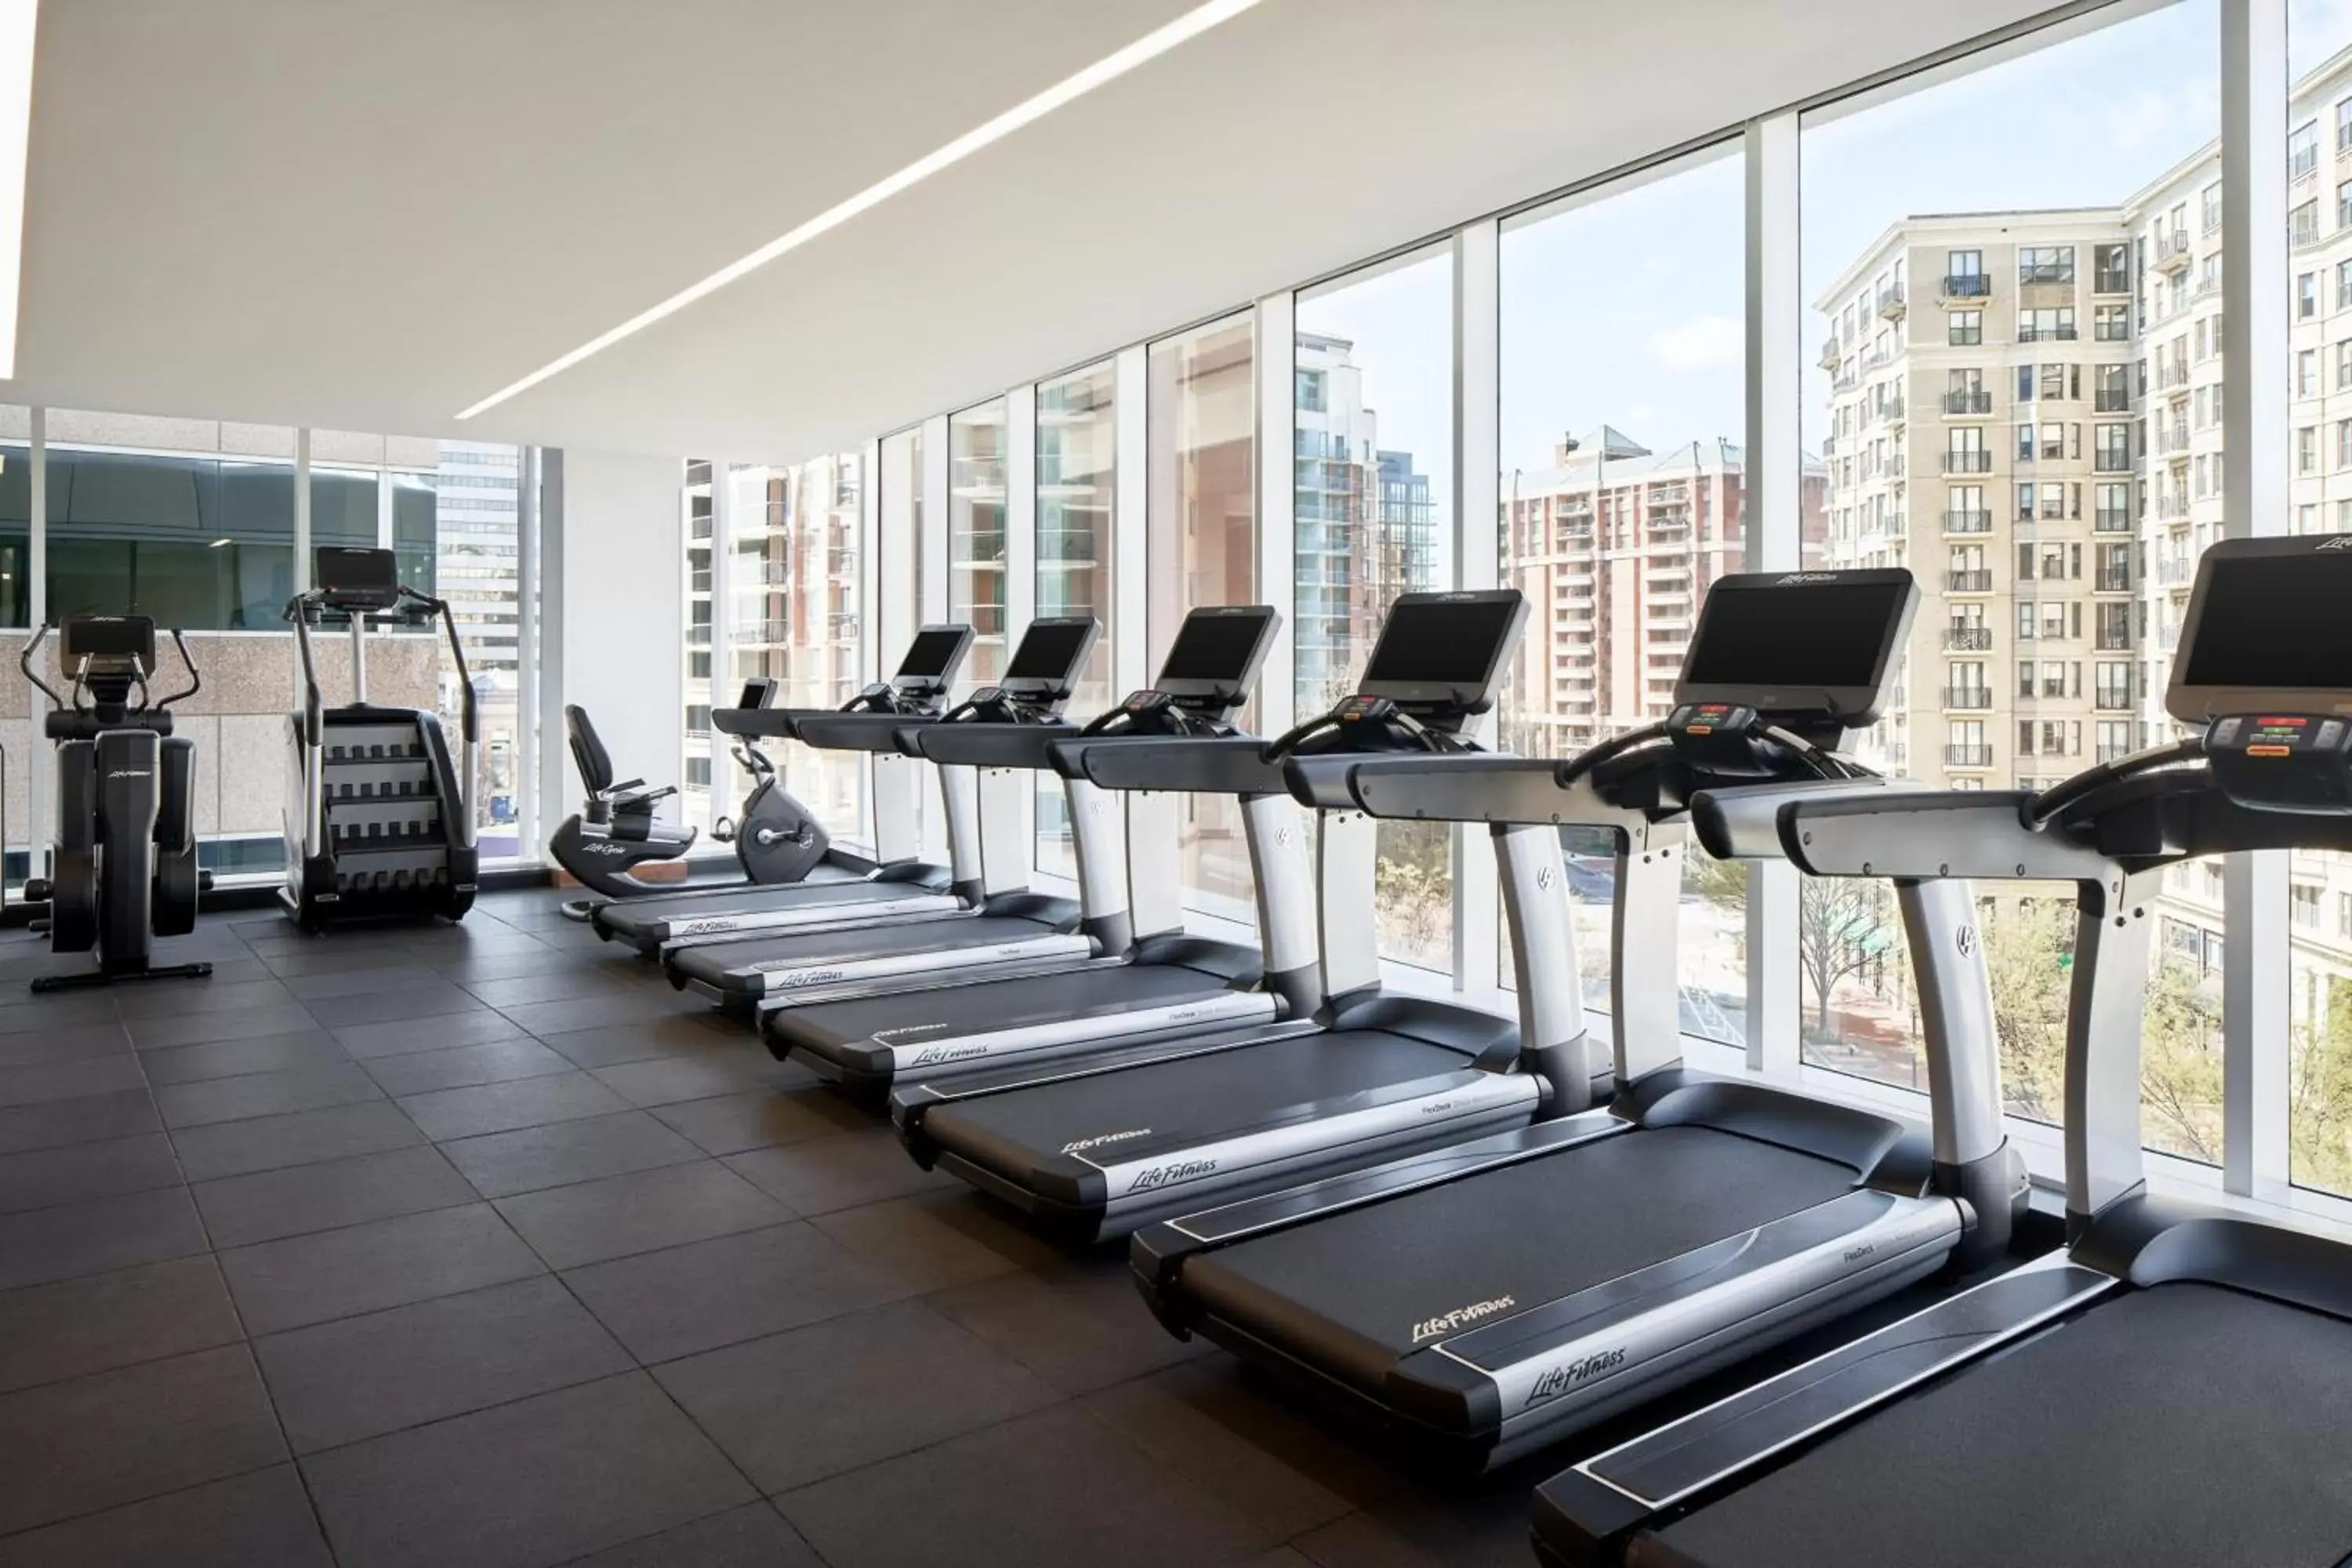 Fitness centre/facilities, Fitness Center/Facilities in Marriott Bethesda Downtown at Marriott HQ